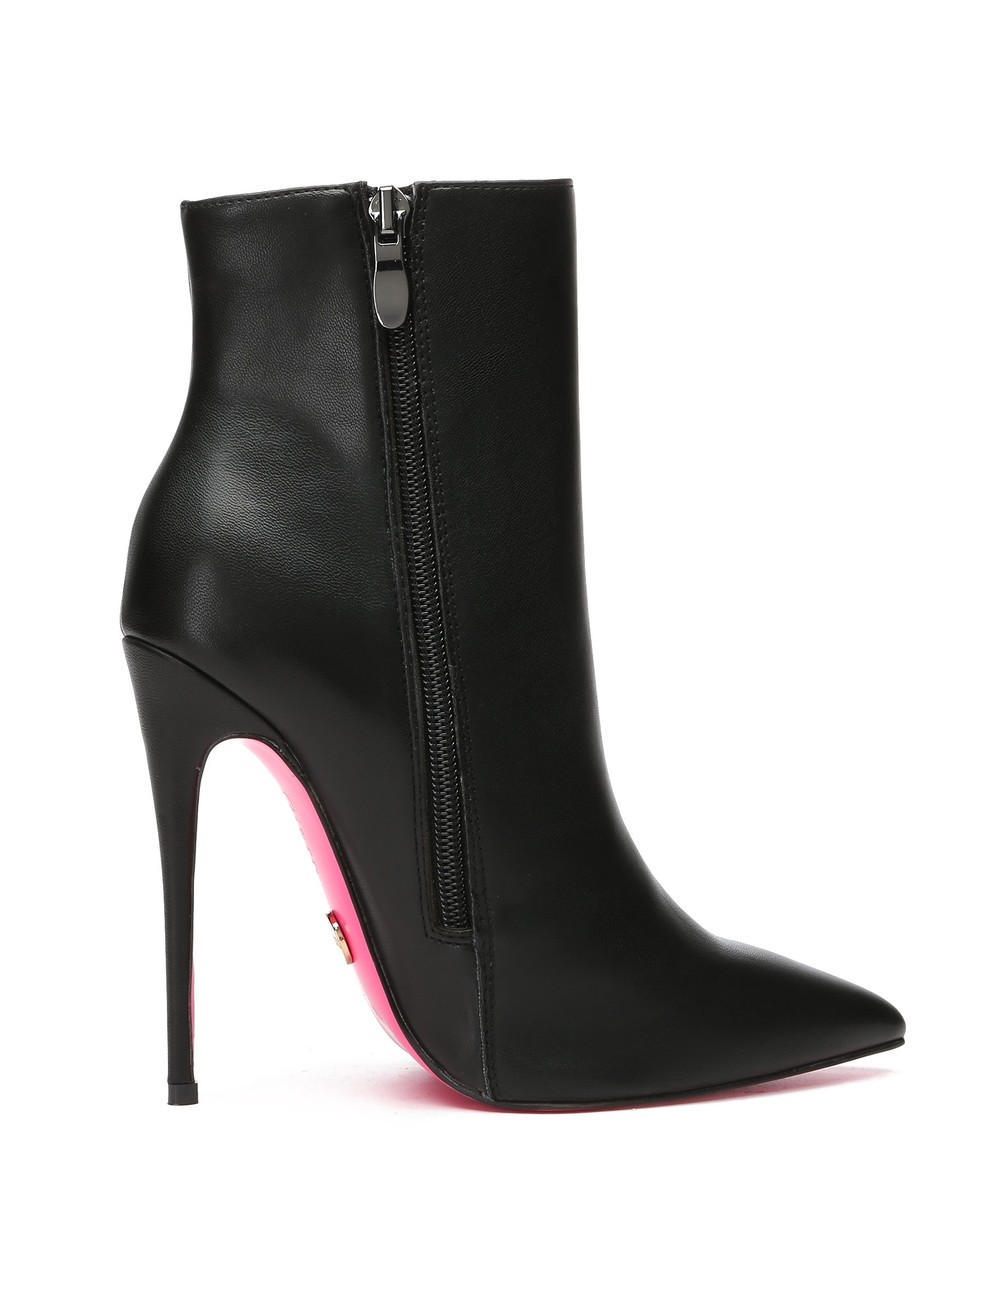 Giaro TALIA BLACK MATTE ANKLE BOOTS - Shoebidoo Shoes | Giaro high heels